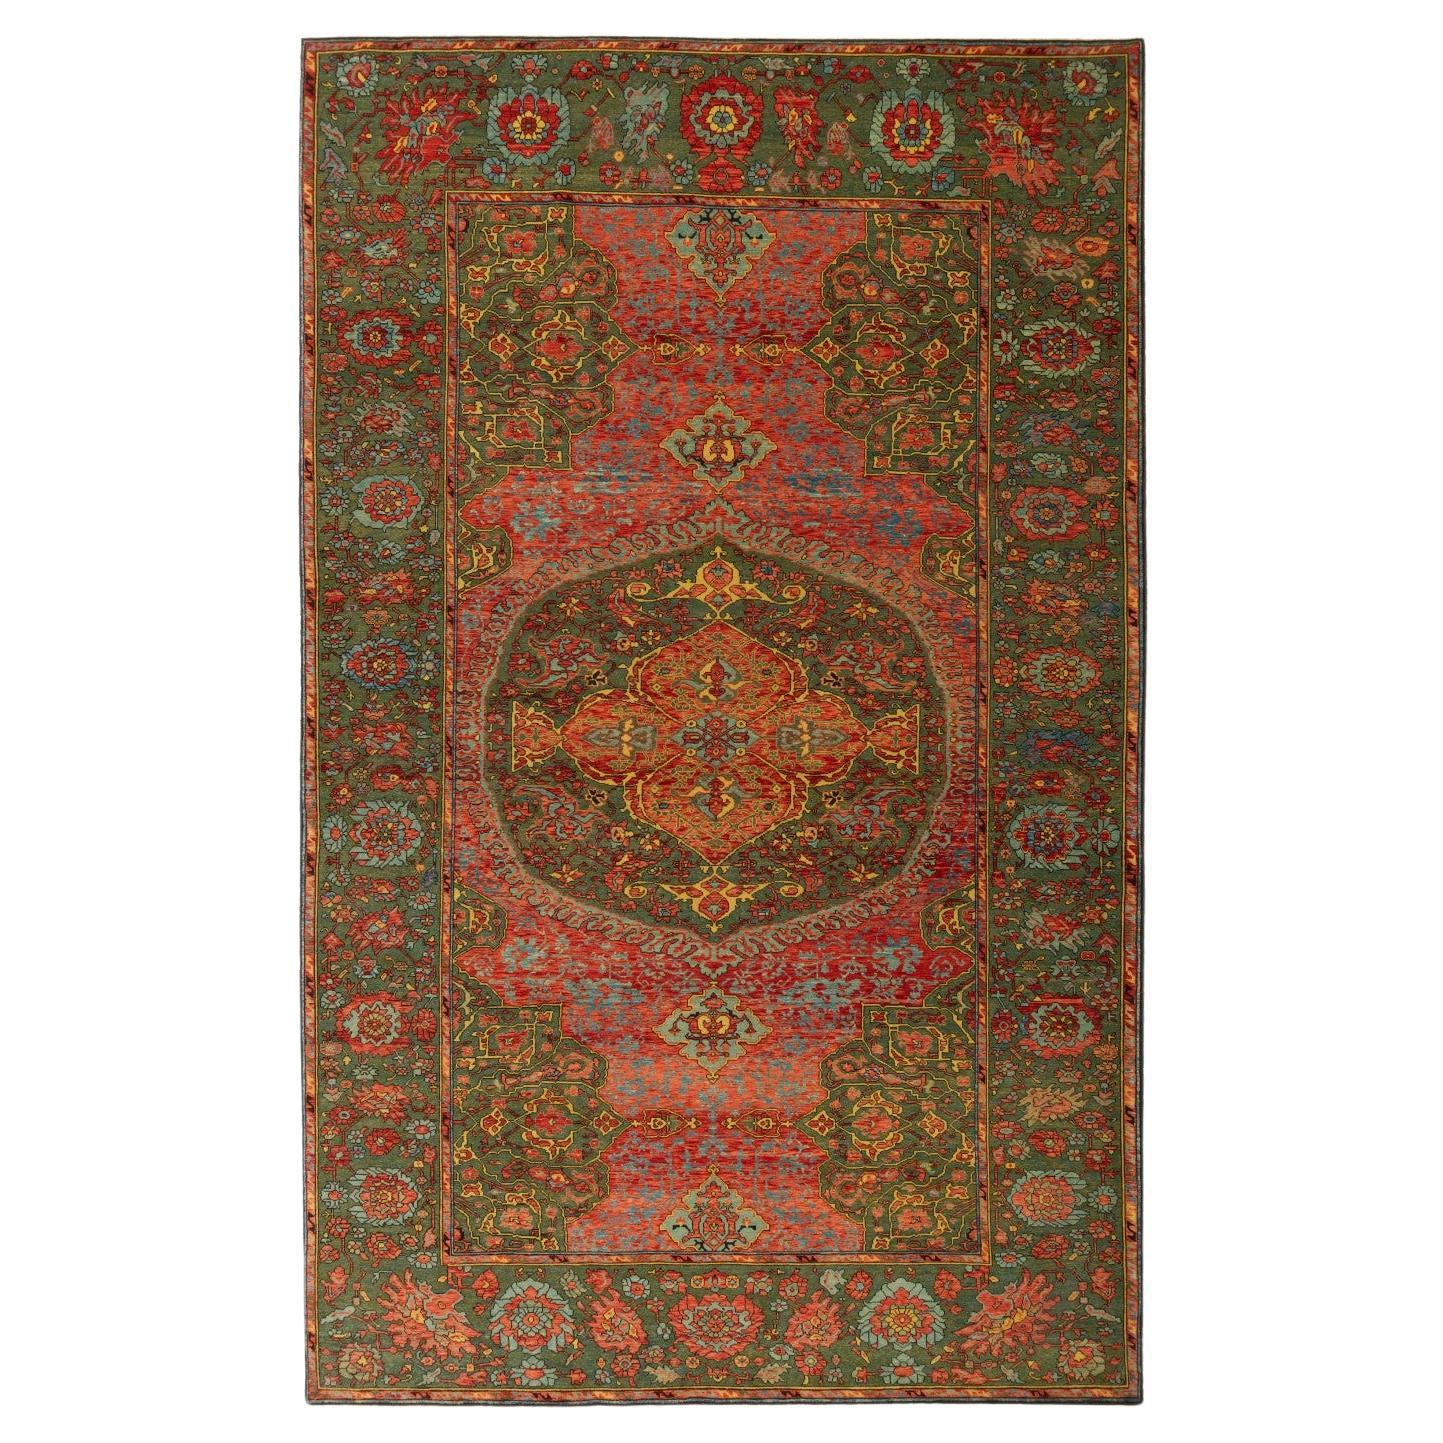 Ararat Rugs Medallion Ushak Carpet Museum Piece 17th C. Revival Rug Natural Dyed For Sale